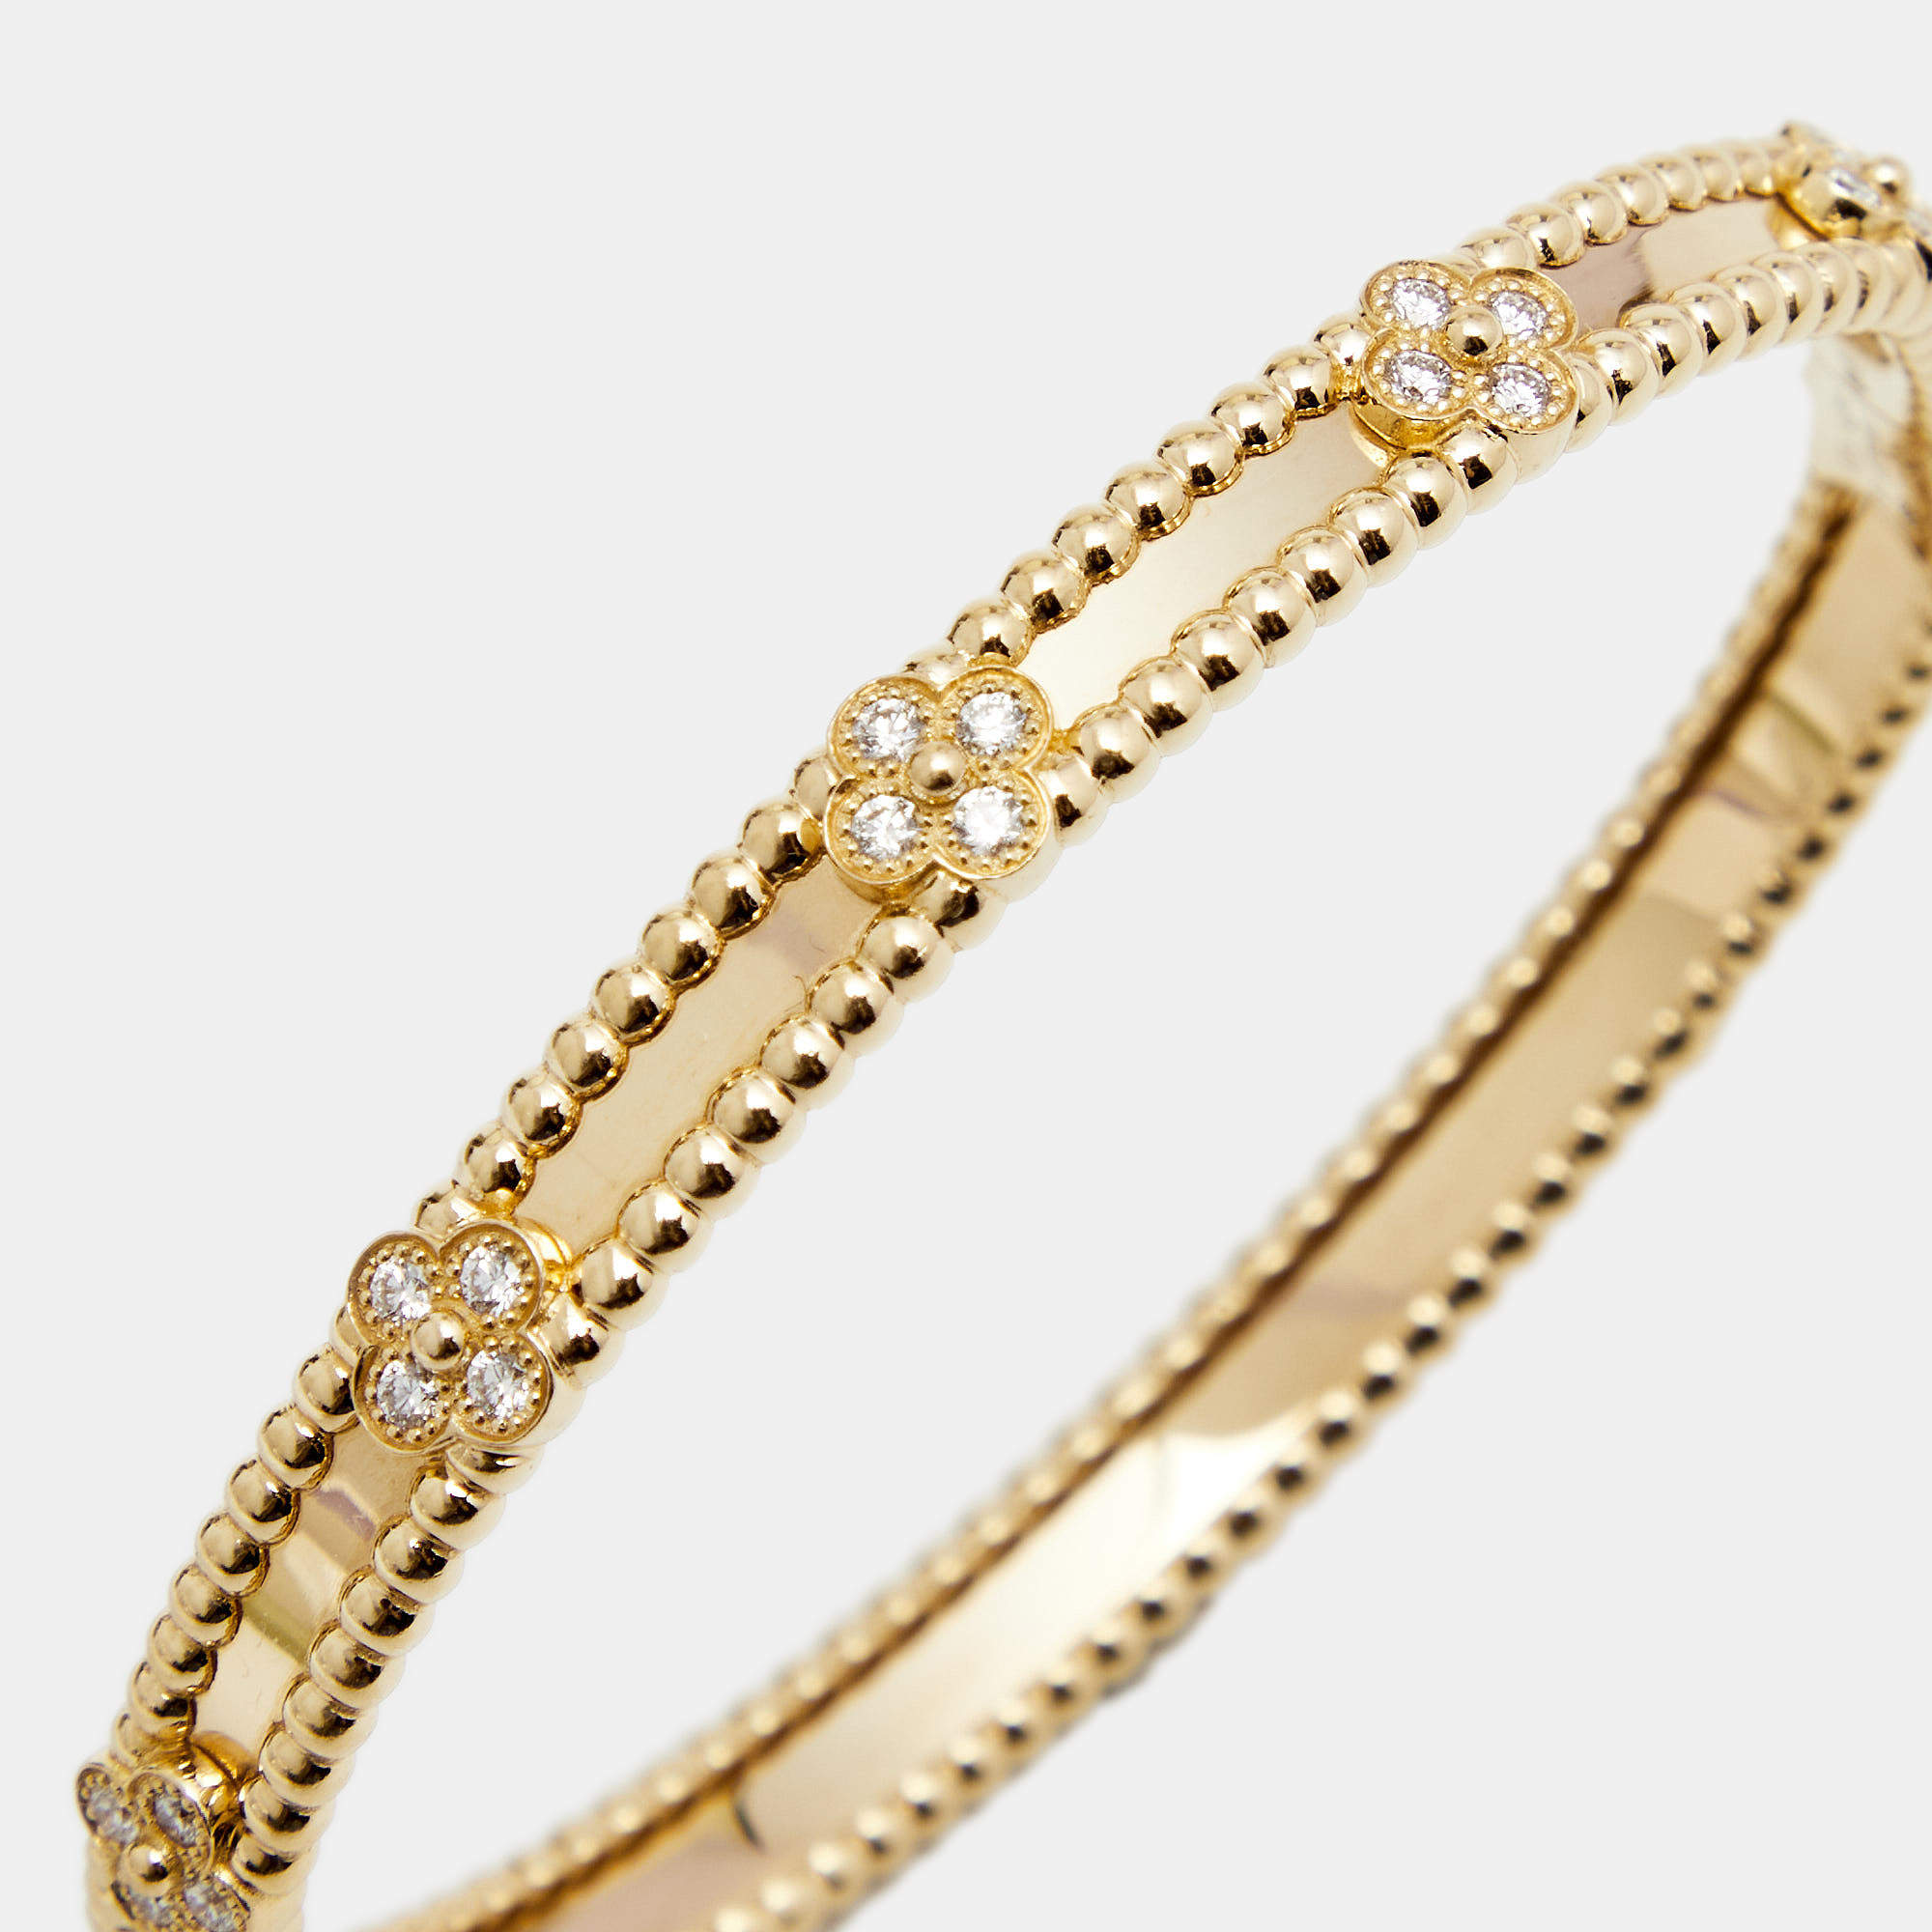 Perlée clovers bracelet, small model 18K yellow gold, Diamond